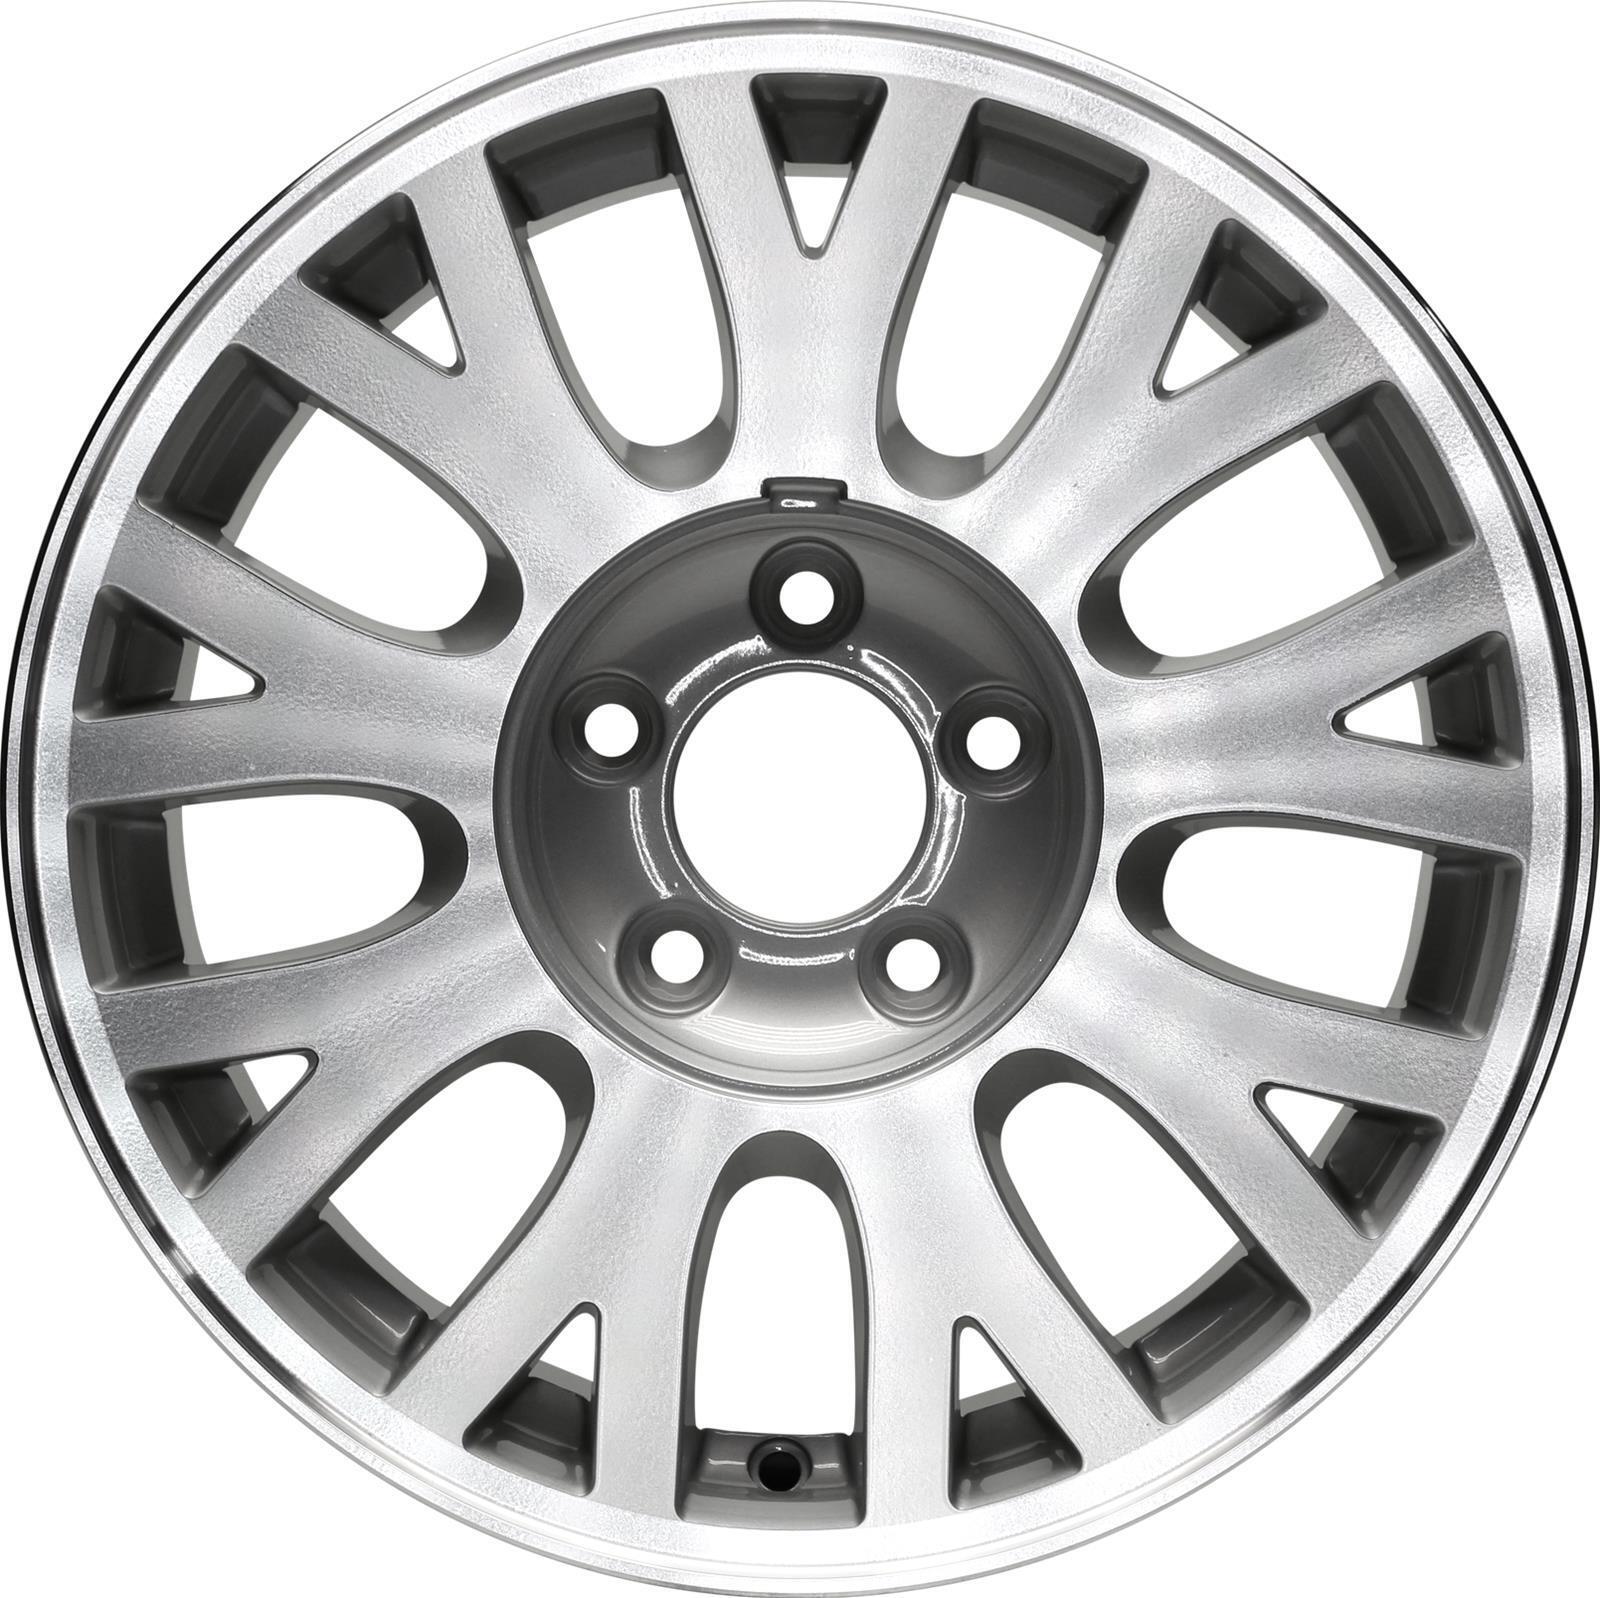 New Aluminum Wheel Rim 16 inch for 03-05 Ford Crown Victoria 5 Lug 114.3mm 